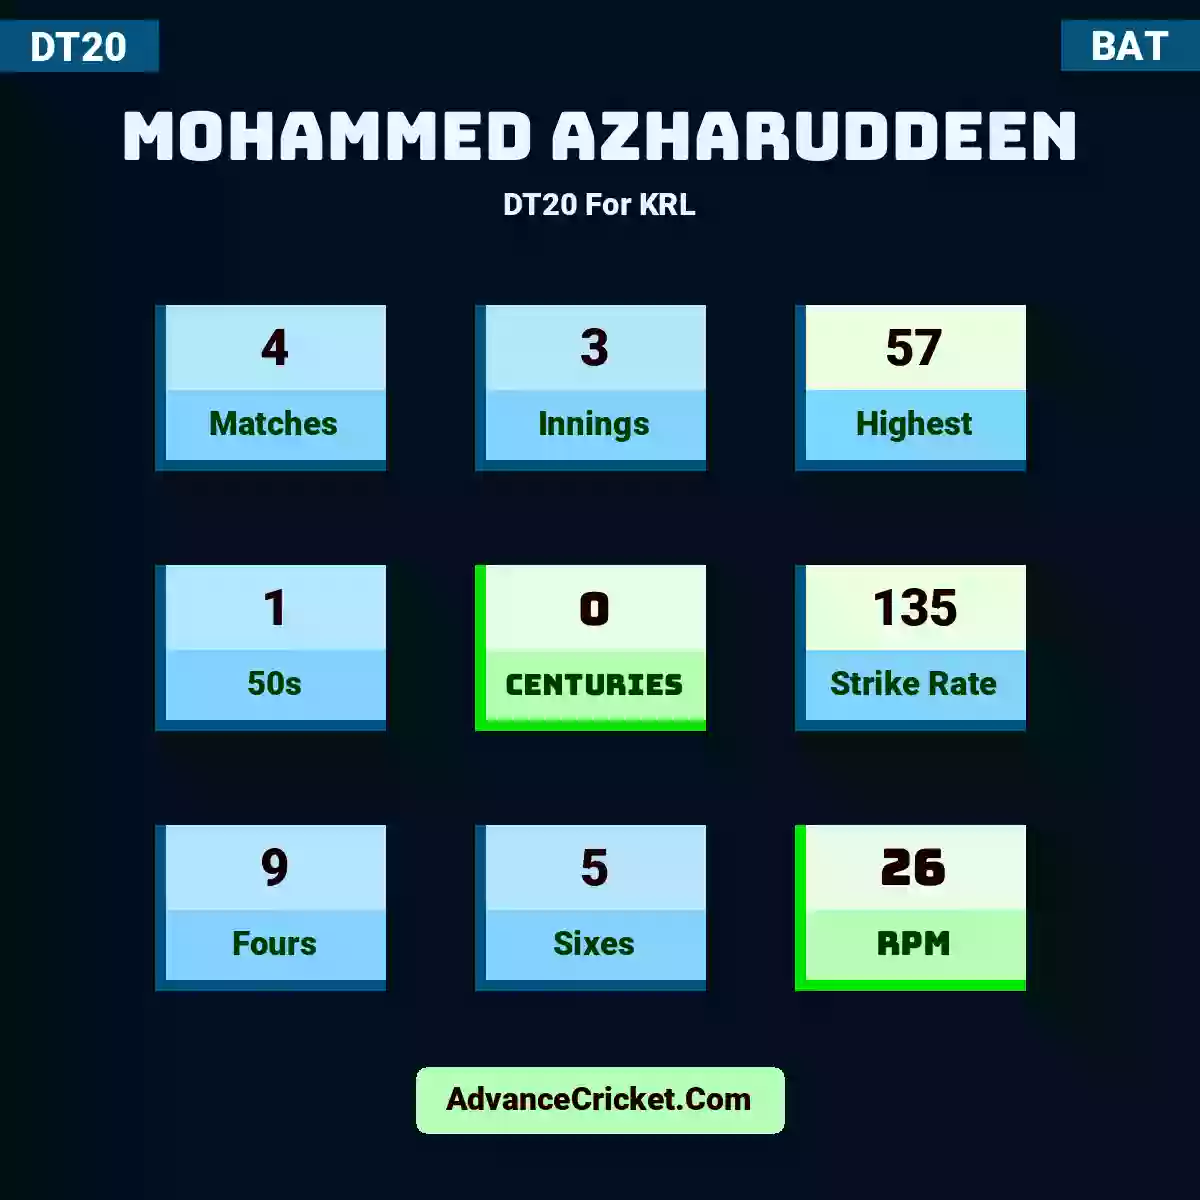 Mohammed Azharuddeen DT20  For KRL, Mohammed Azharuddeen played 4 matches, scored 57 runs as highest, 1 half-centuries, and 0 centuries, with a strike rate of 135. M.Azharuddeen hit 9 fours and 5 sixes, with an RPM of 26.